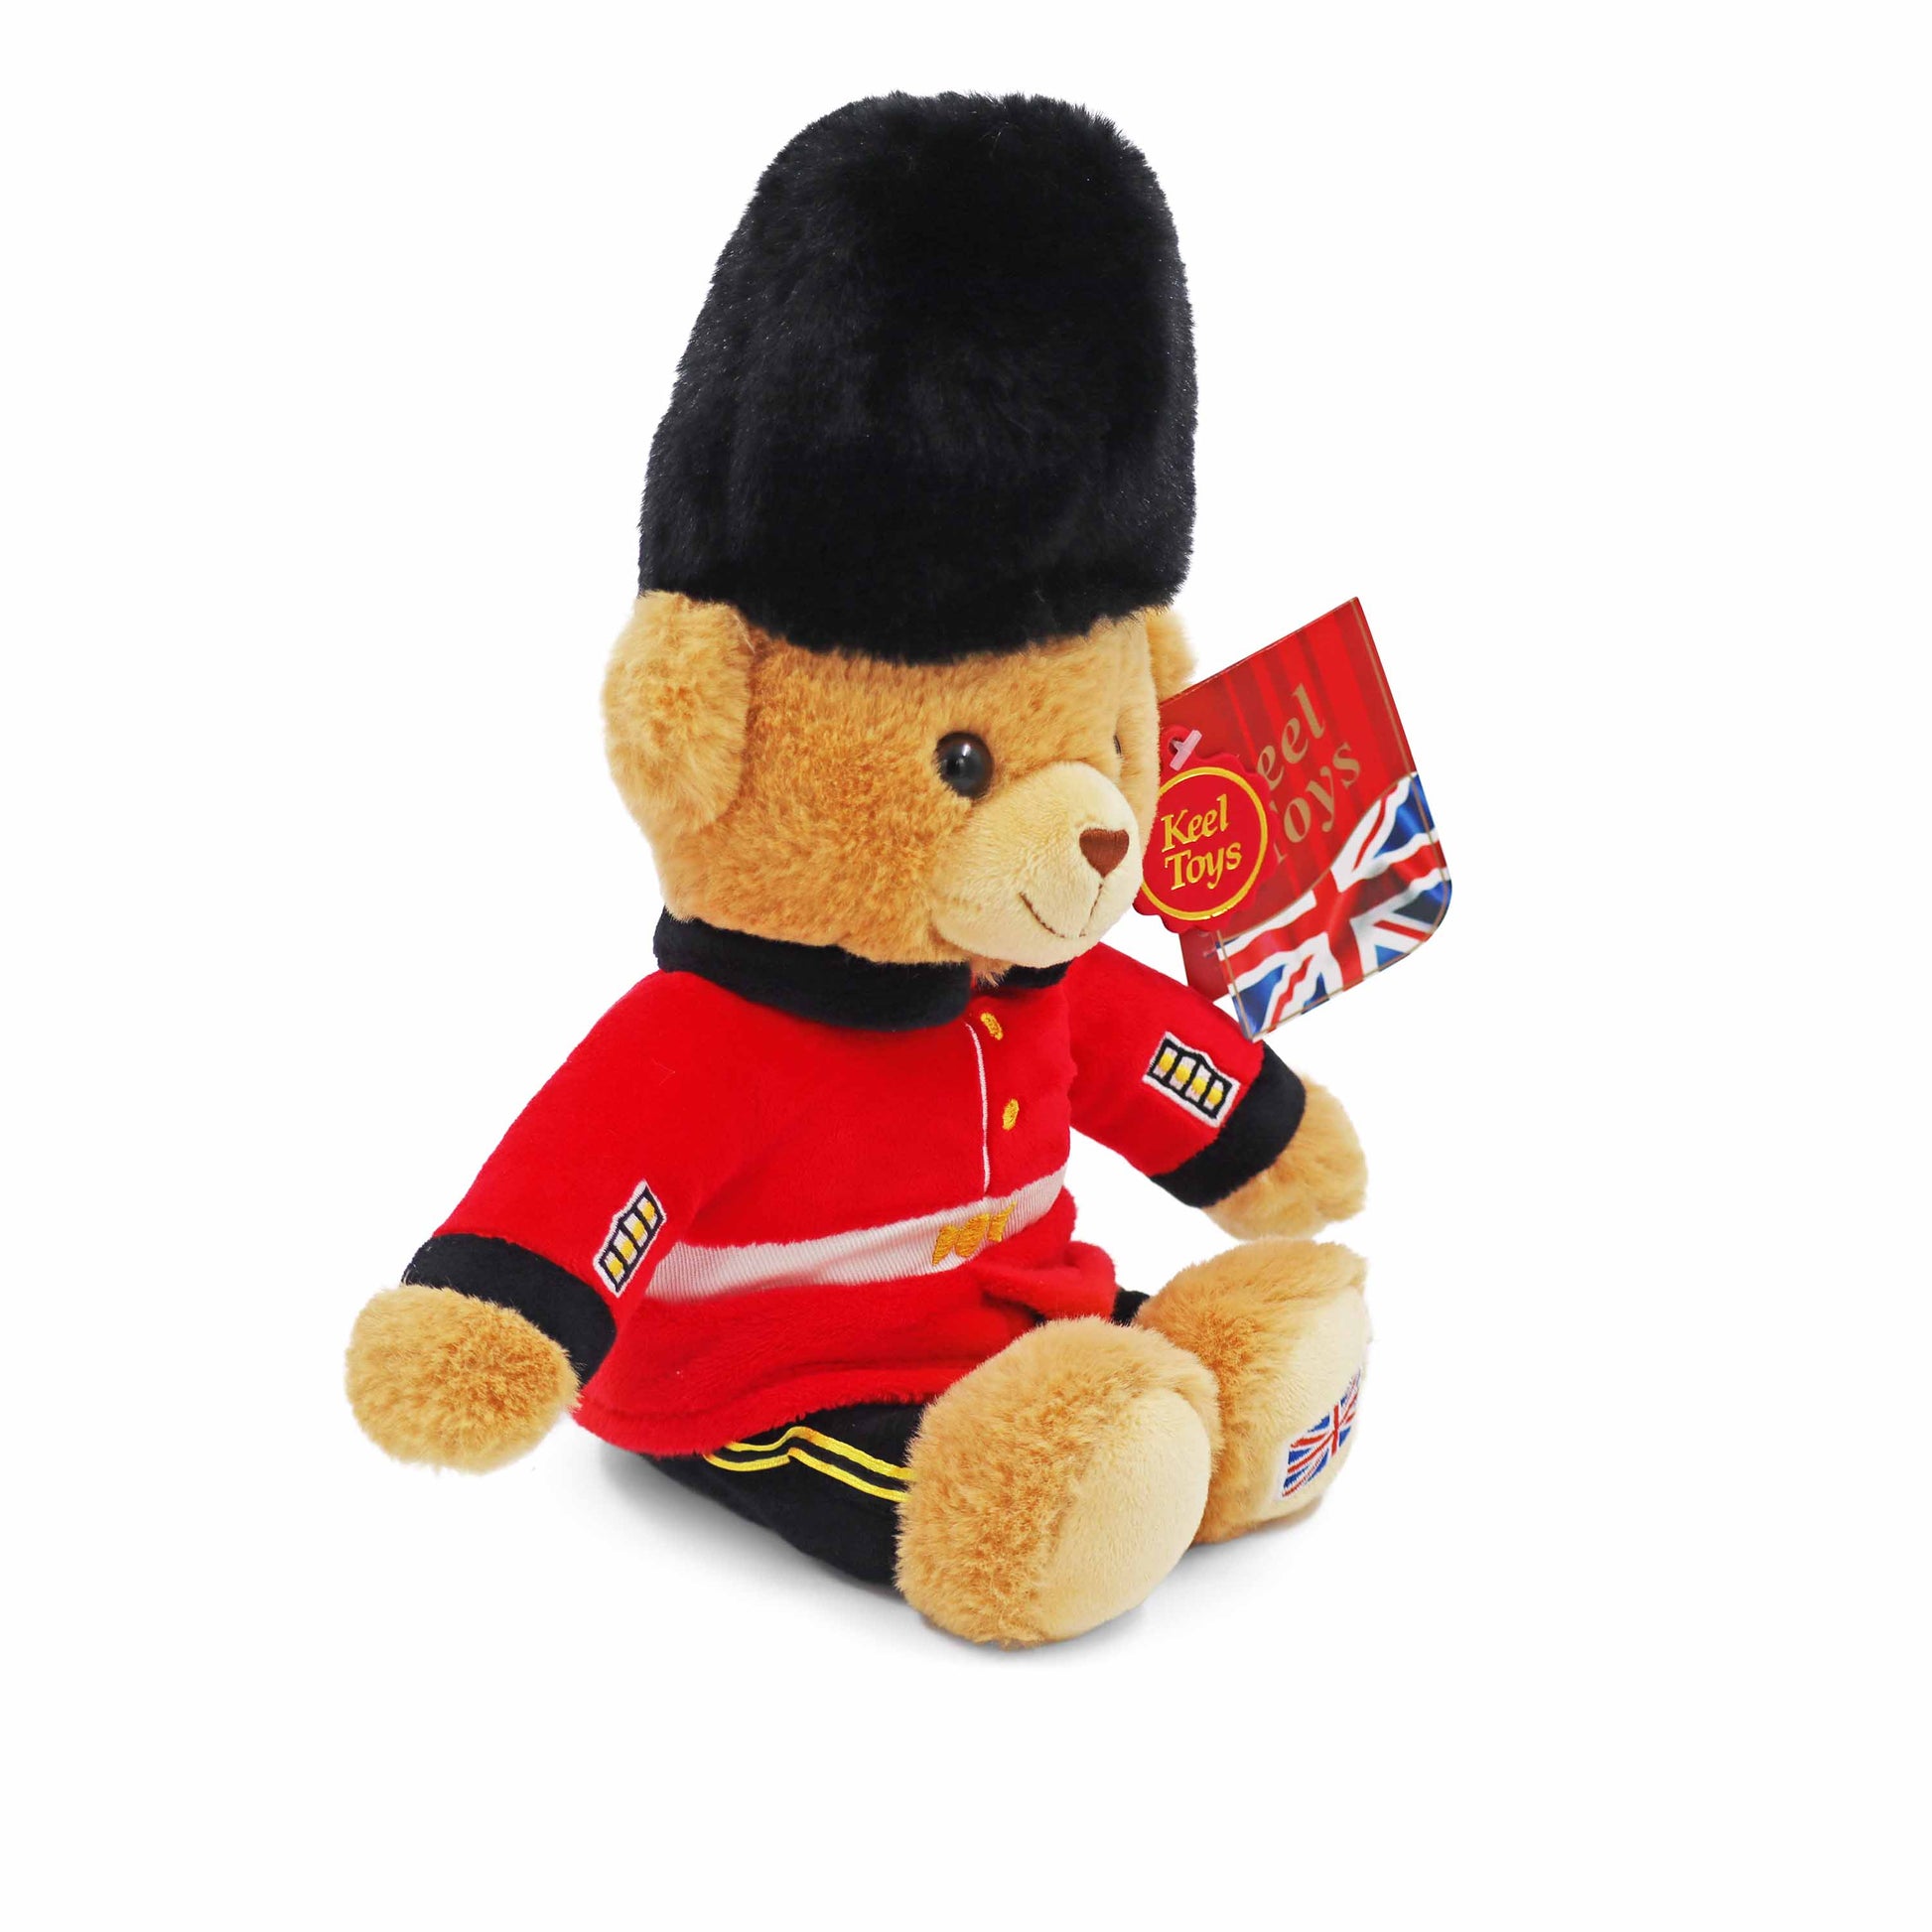 King Guardsman Teddy Bear - London Souvenir Teddy Bears